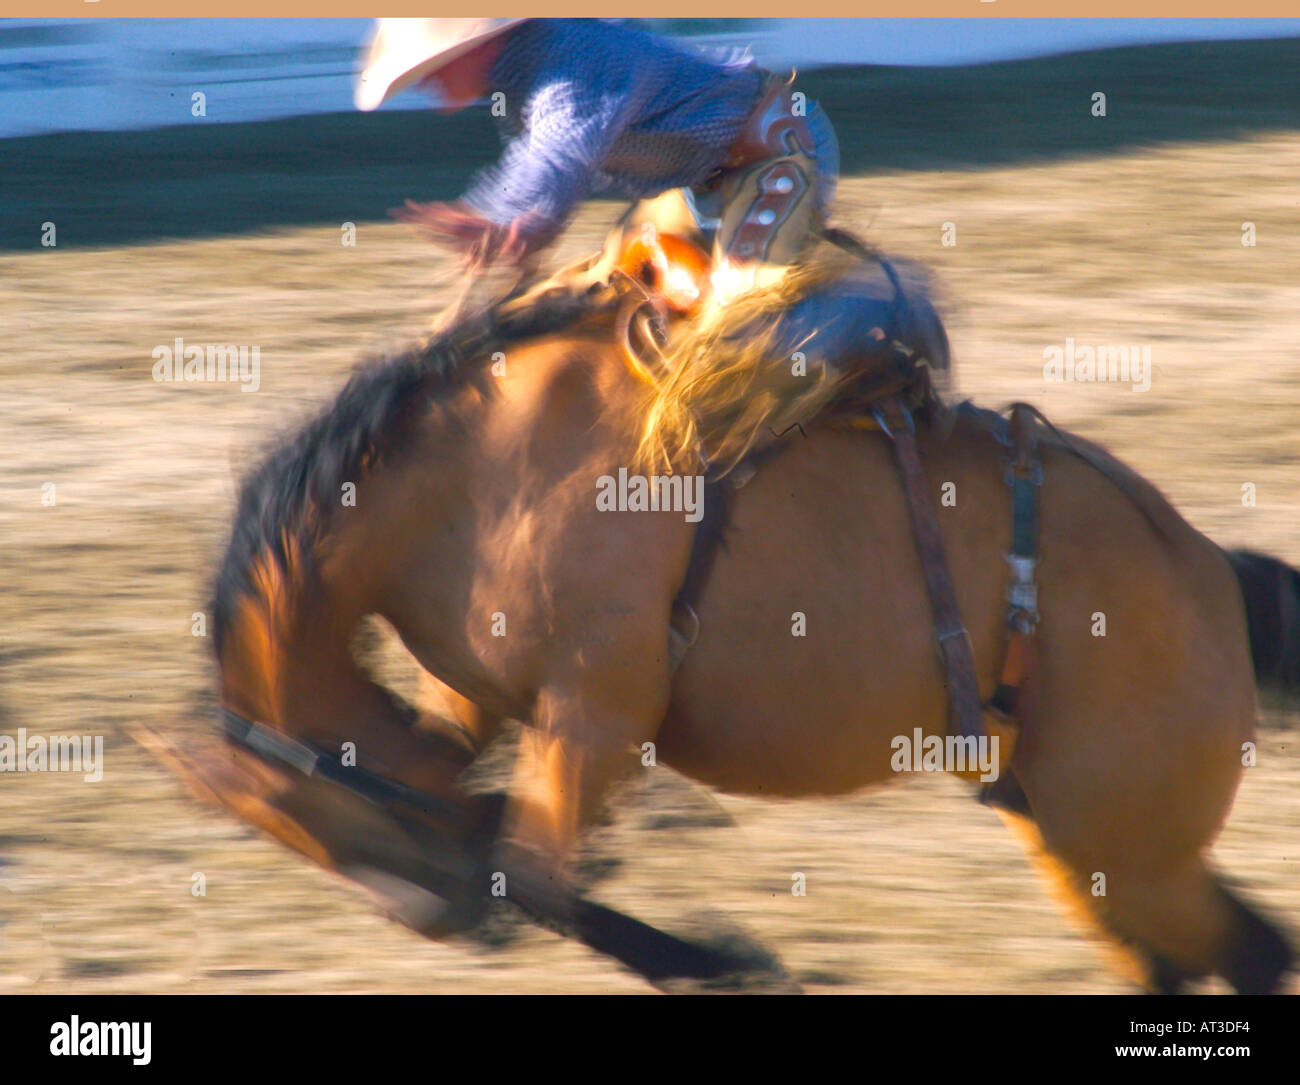 rodeo cowboy riding a horse Stock Photo